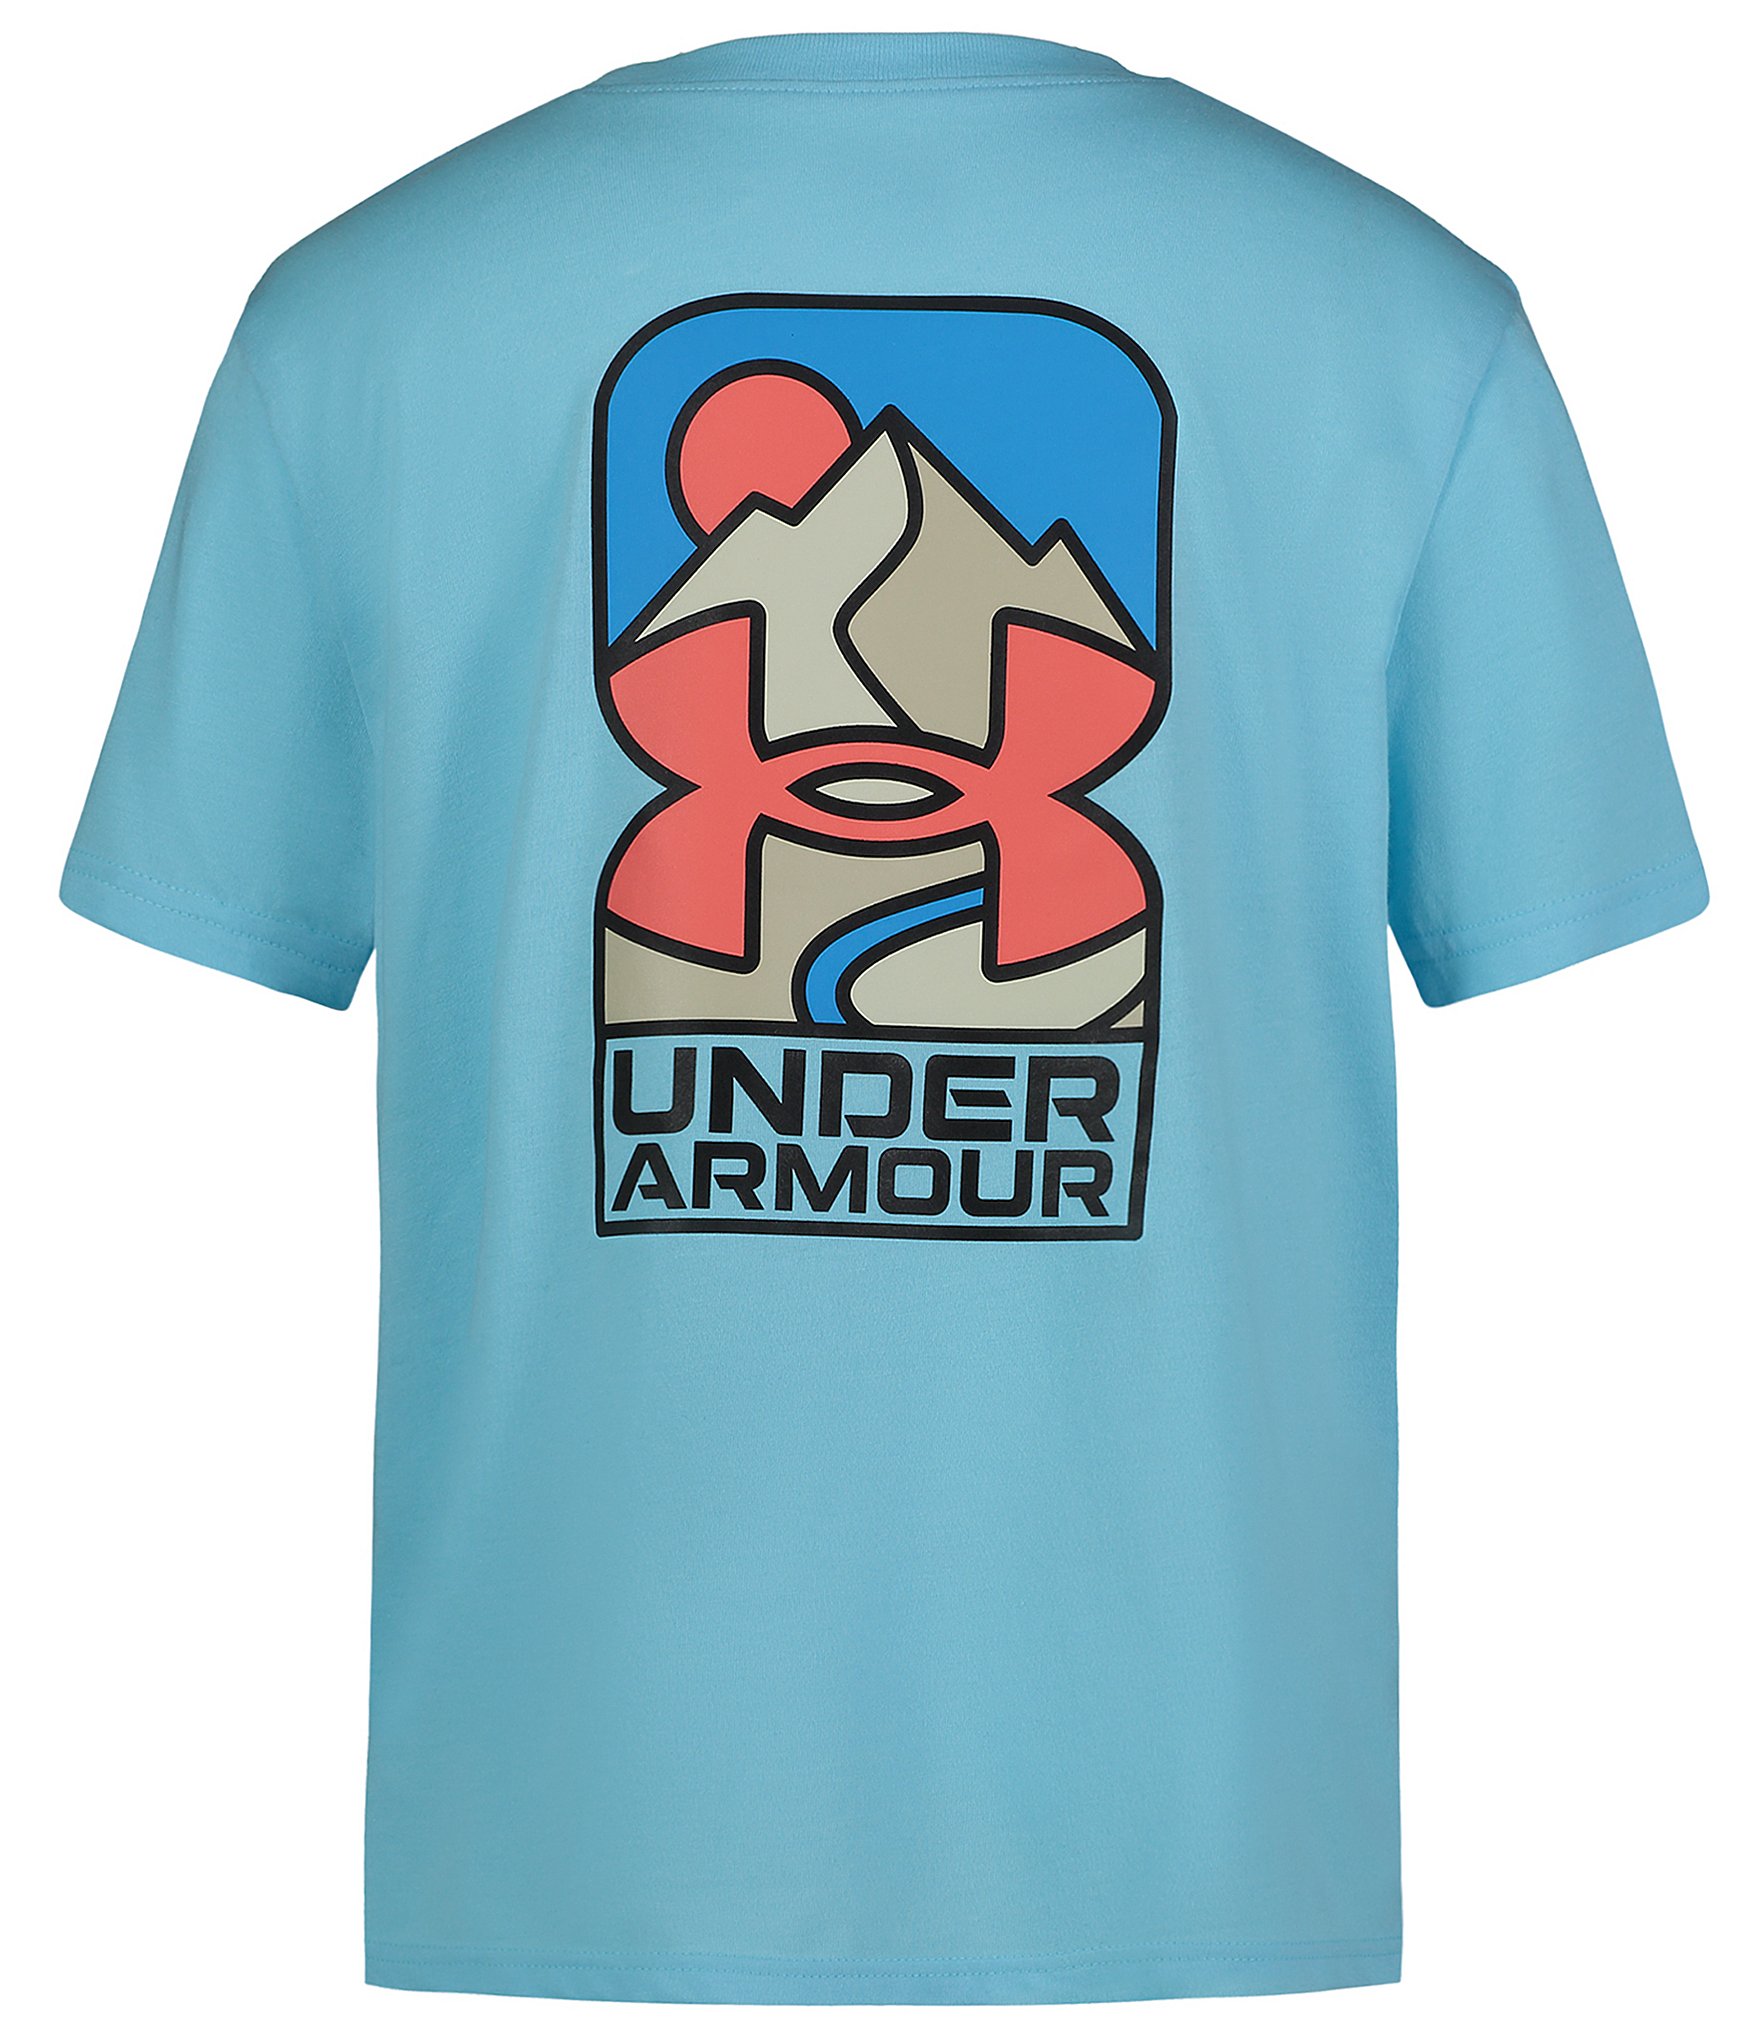 Under Armour Boys' Americana Surf Shirt, Small, White